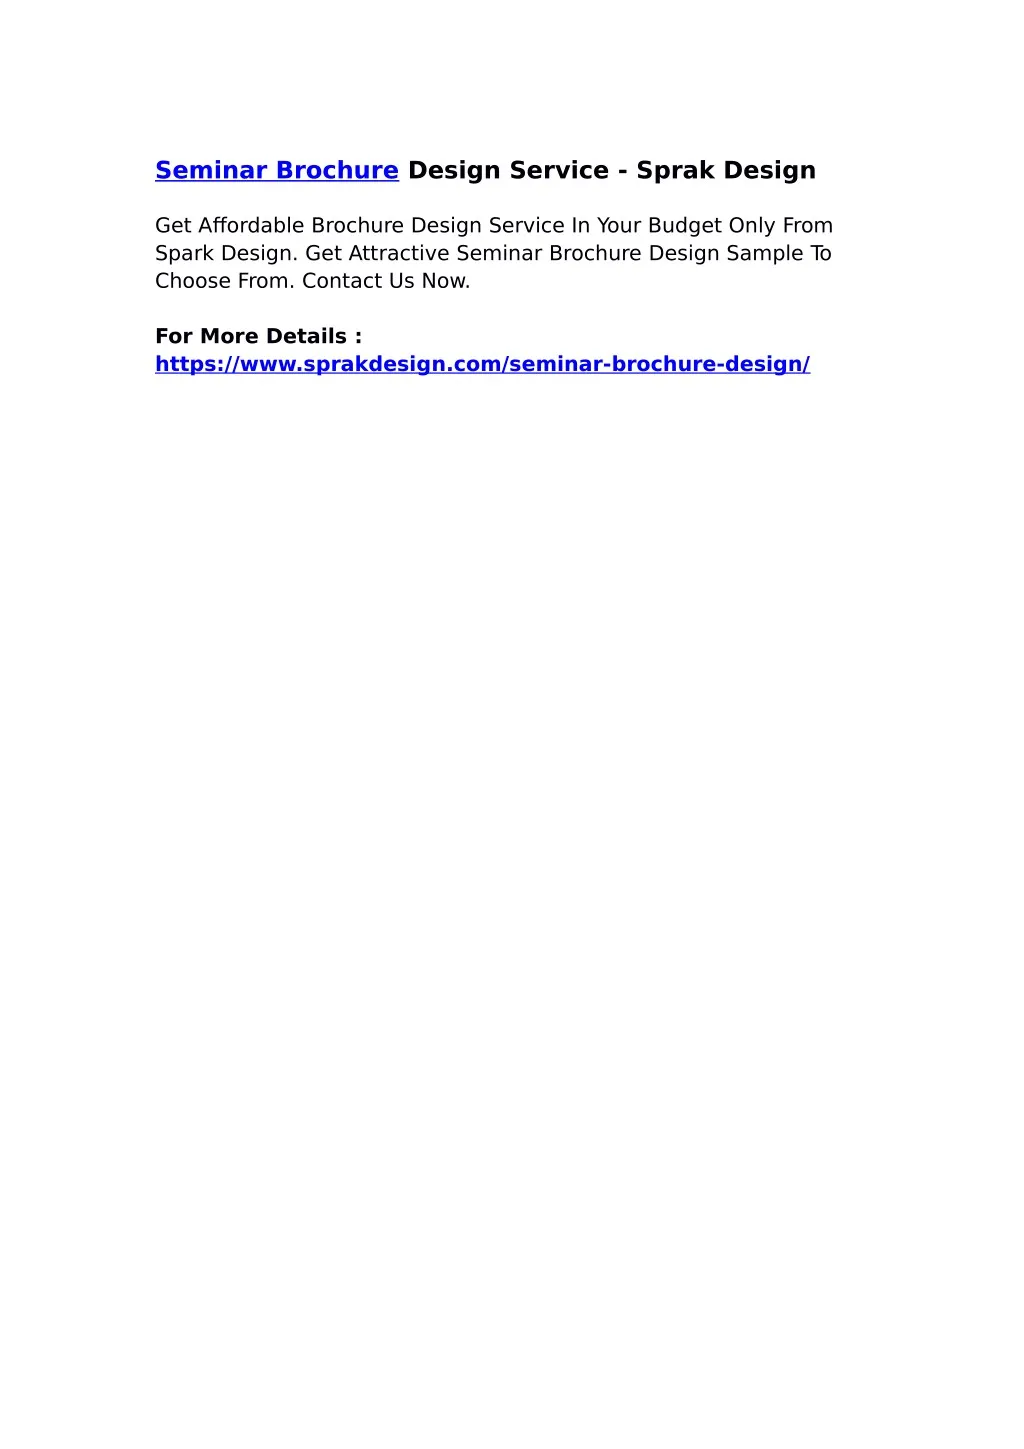 seminar brochure design service sprak design n.